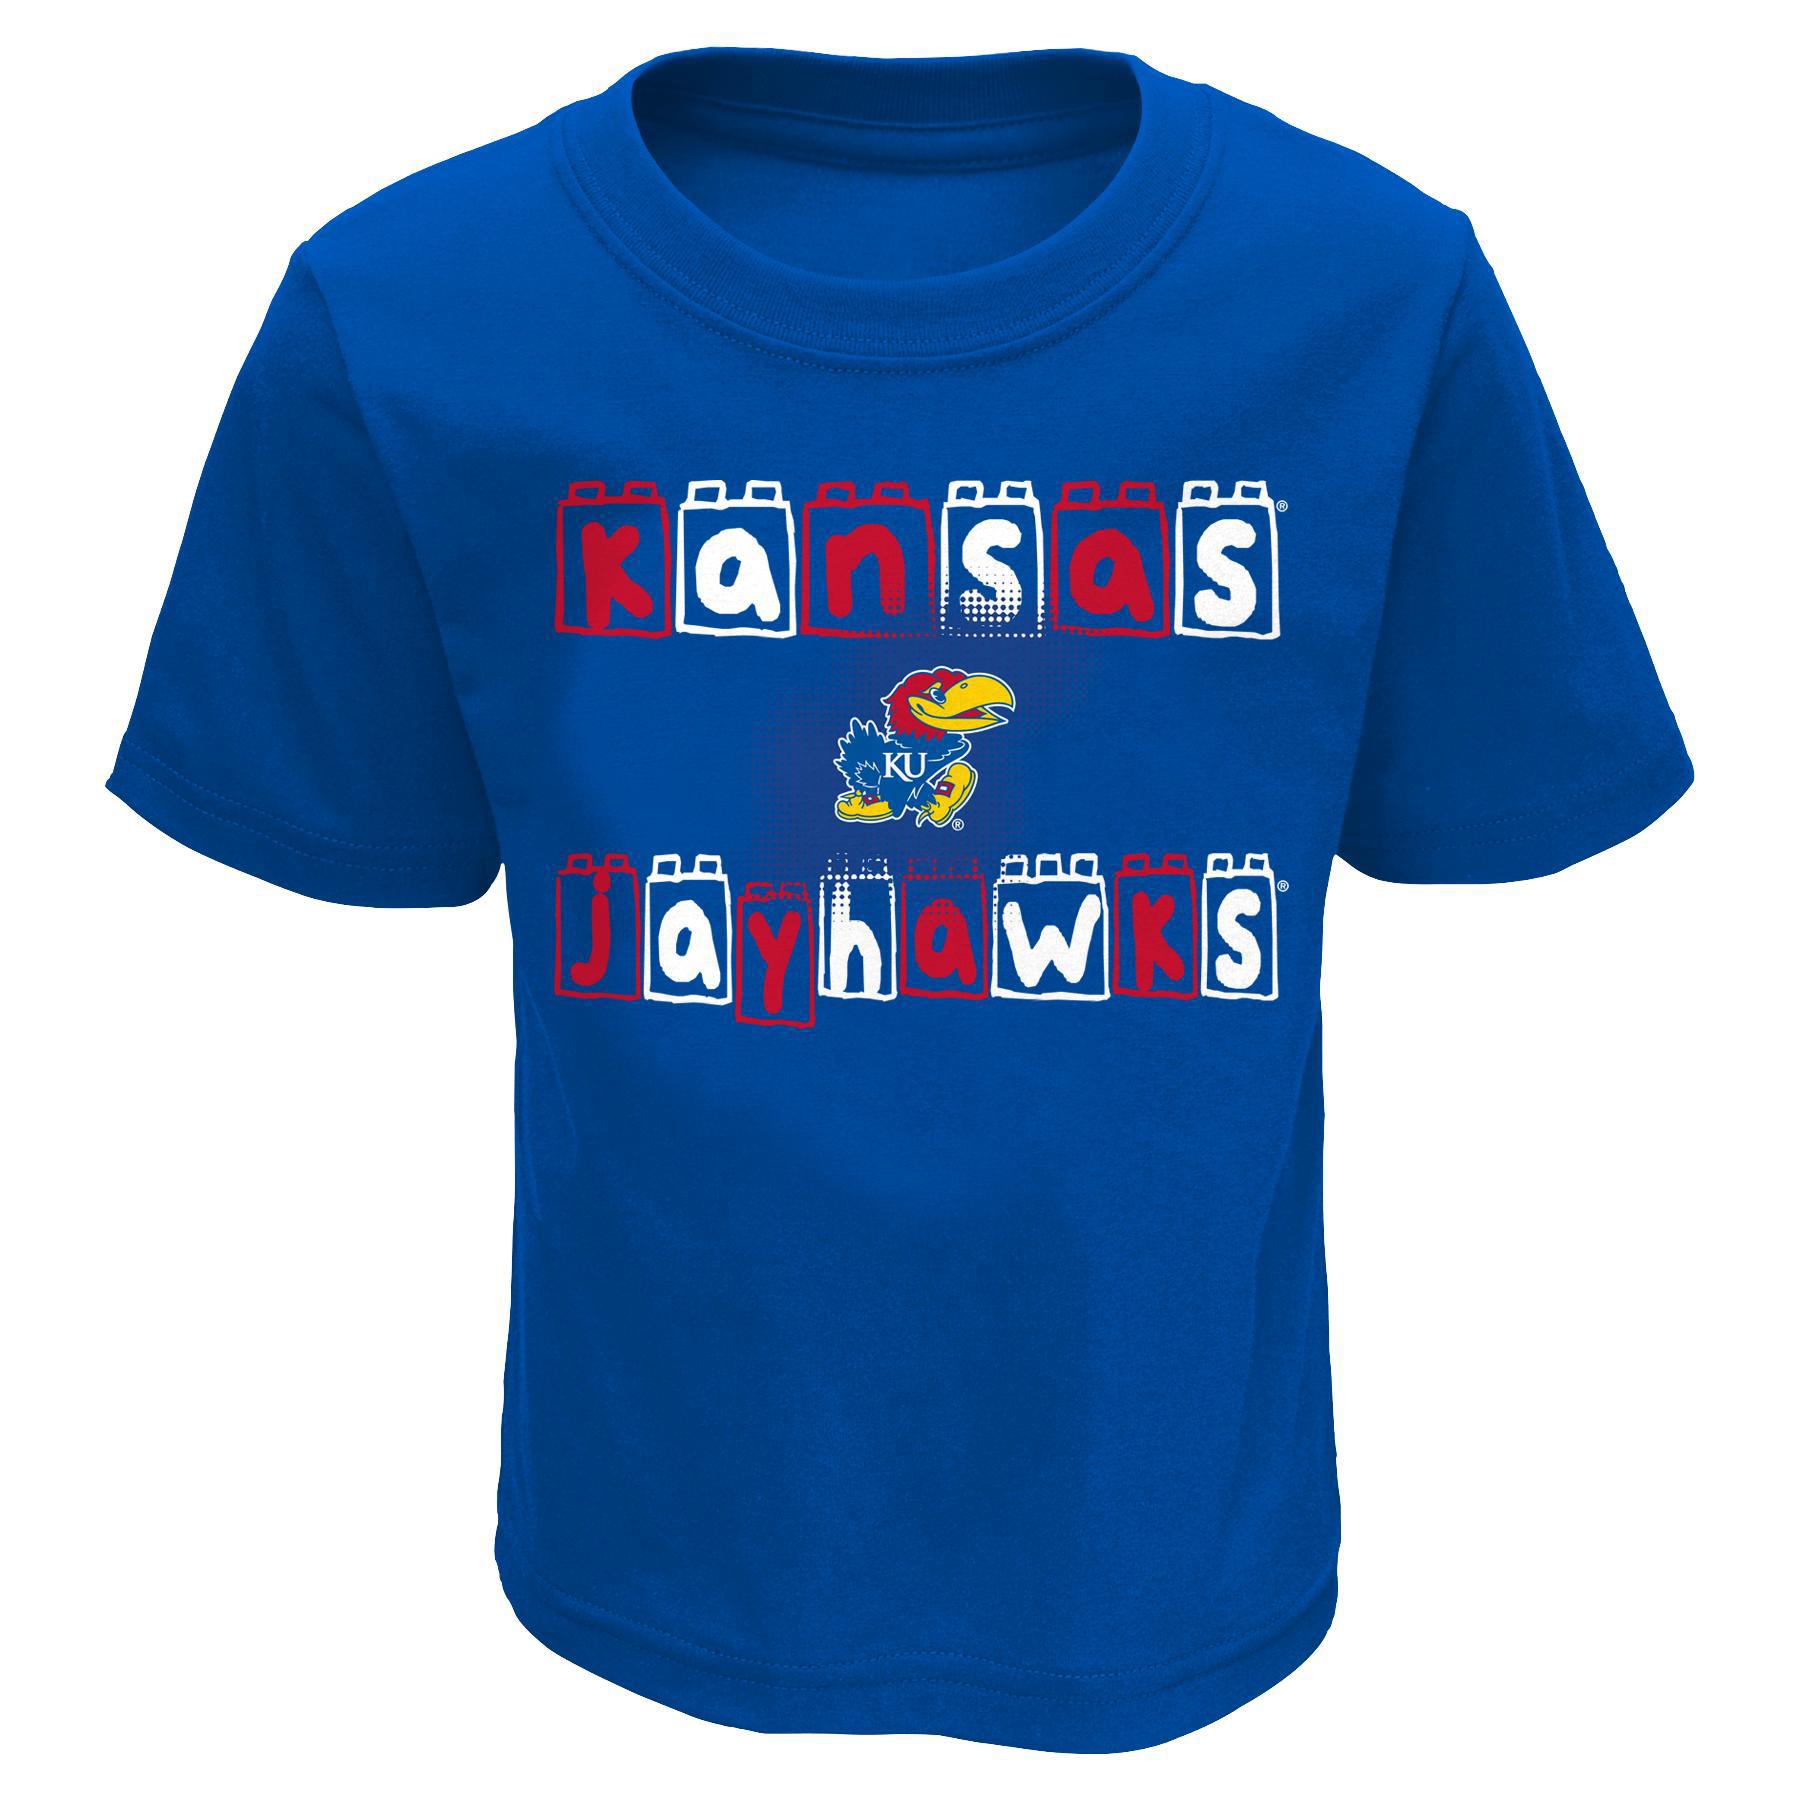 NCAA Toddler's Graphic T-Shirt - Kansas Jayhawks